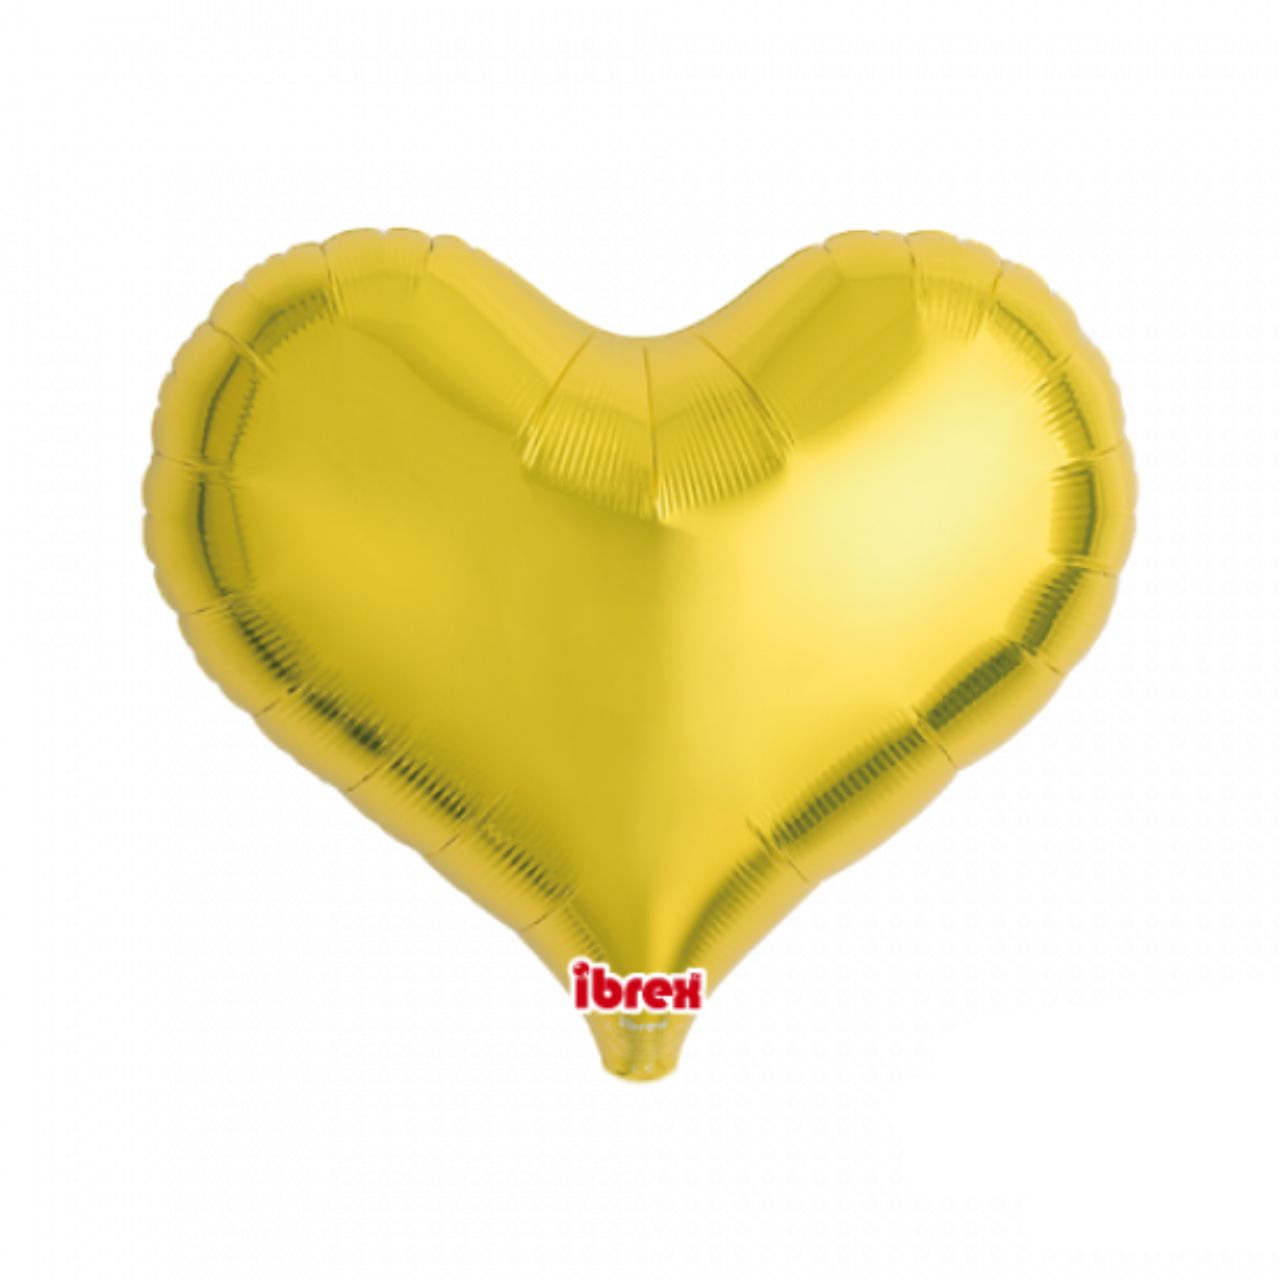 Ibreh Metallic Gold Jelly Heart Foil Balloon (unpackaged)